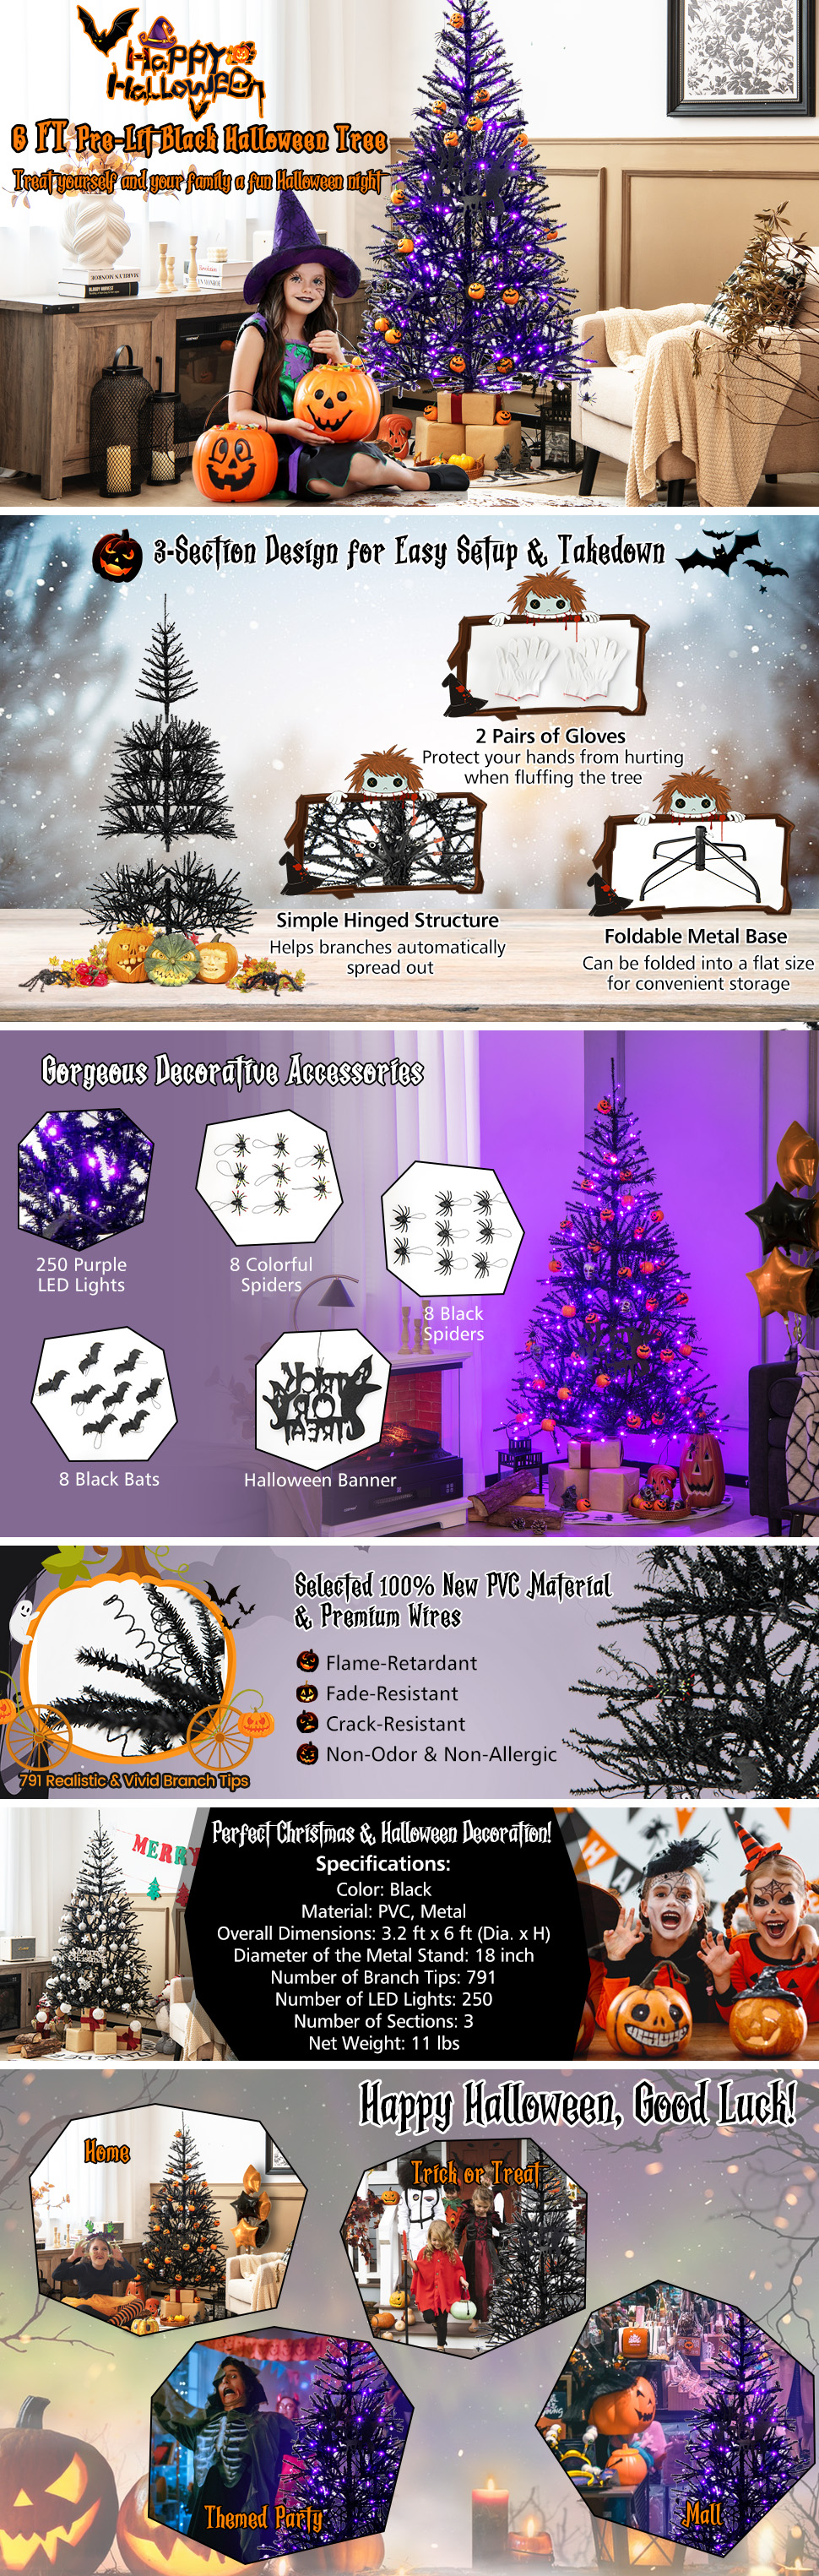 6ft Pre-lit Purple Halloween Christmas Tree W/ Orange Lights